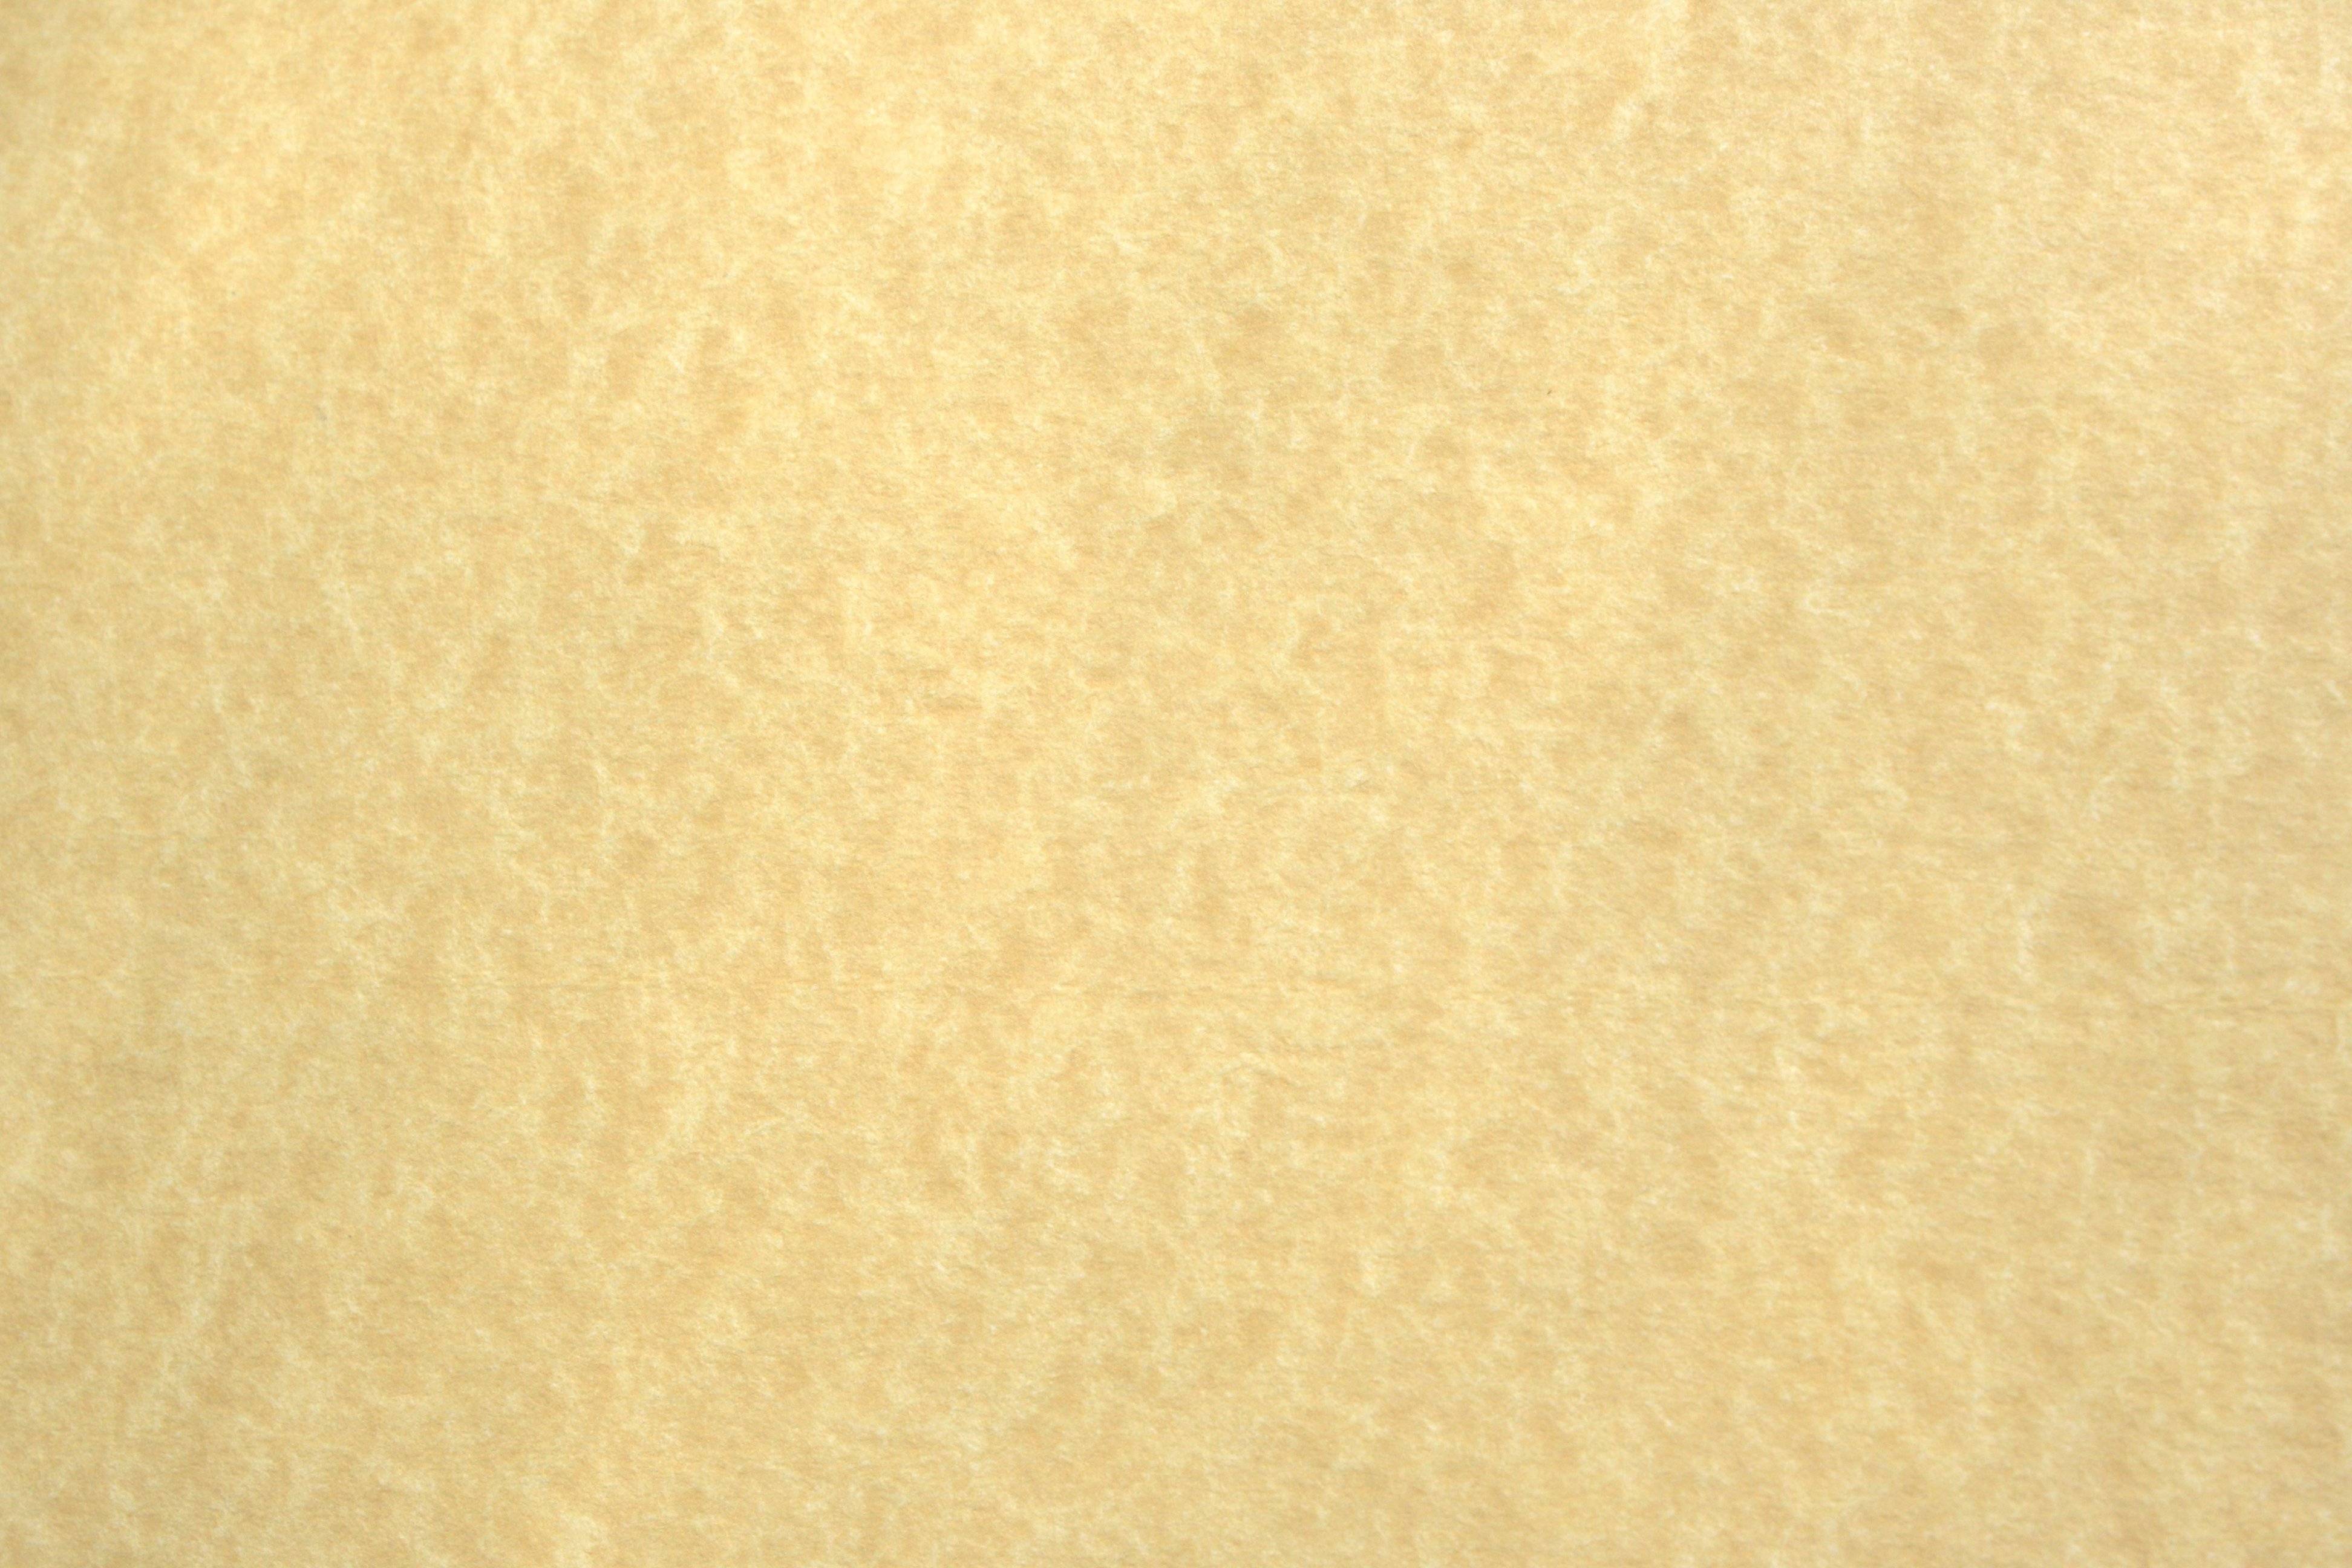 Light Colored Parchment Paper Texture Picture. Free Photograph